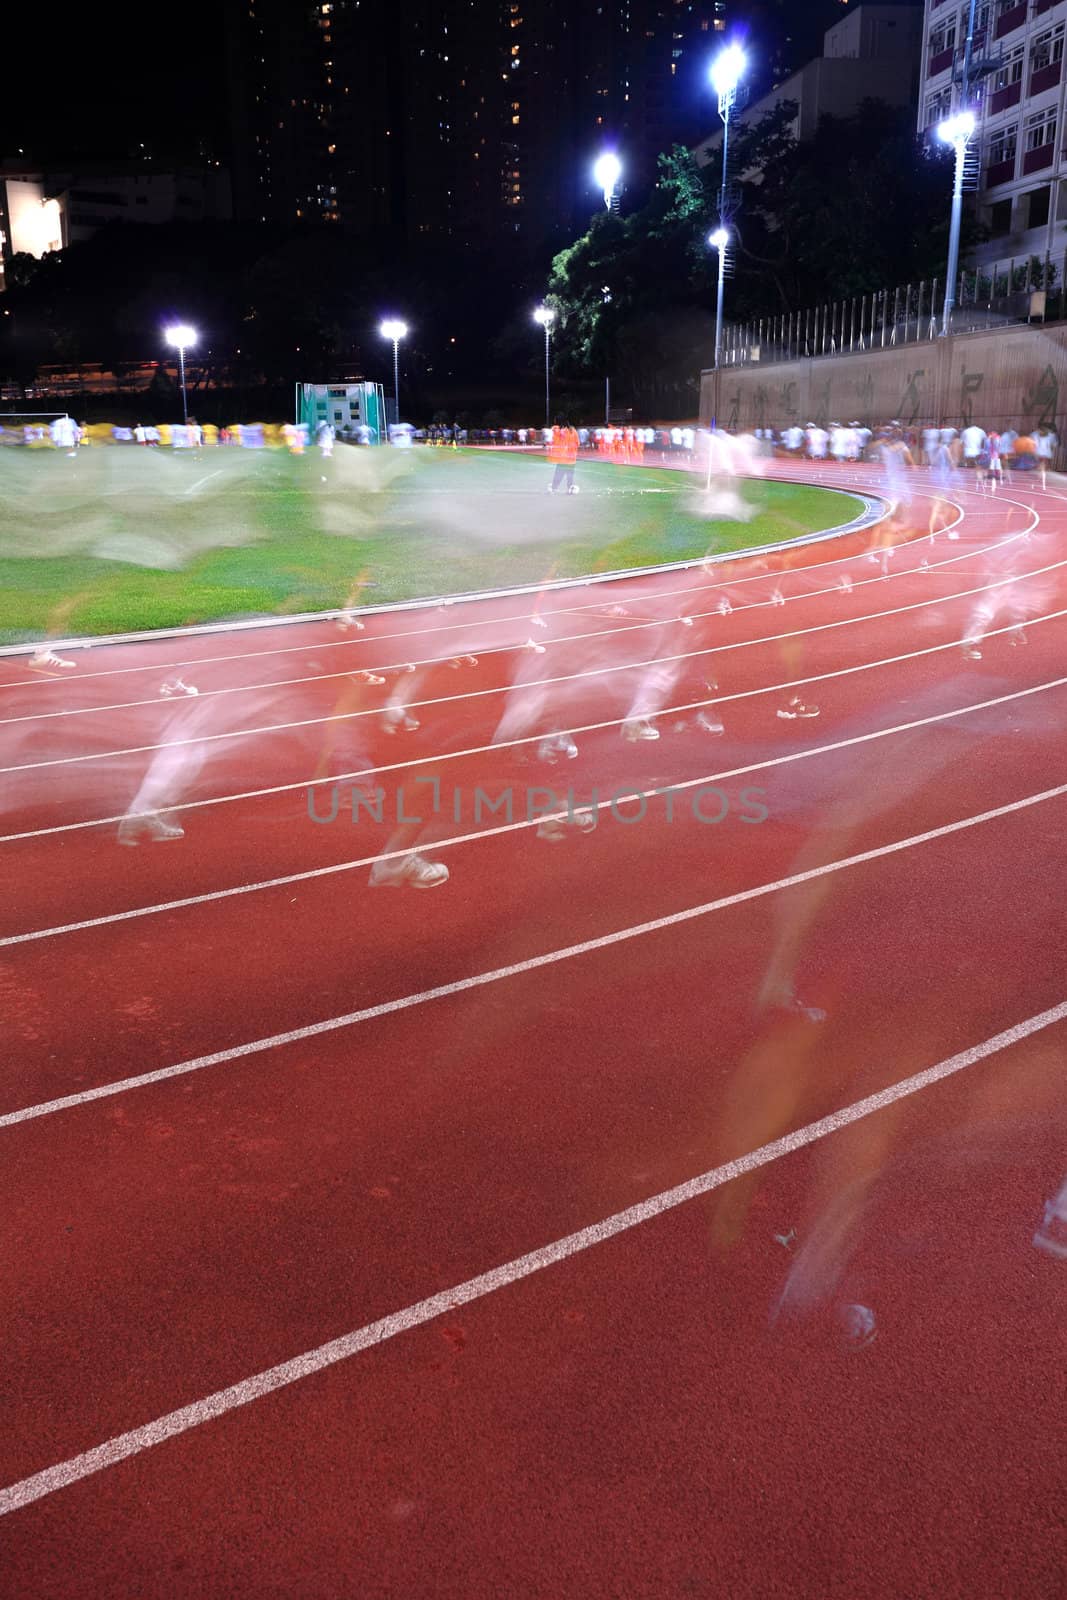 Running tracks in a stadium, with human running blur